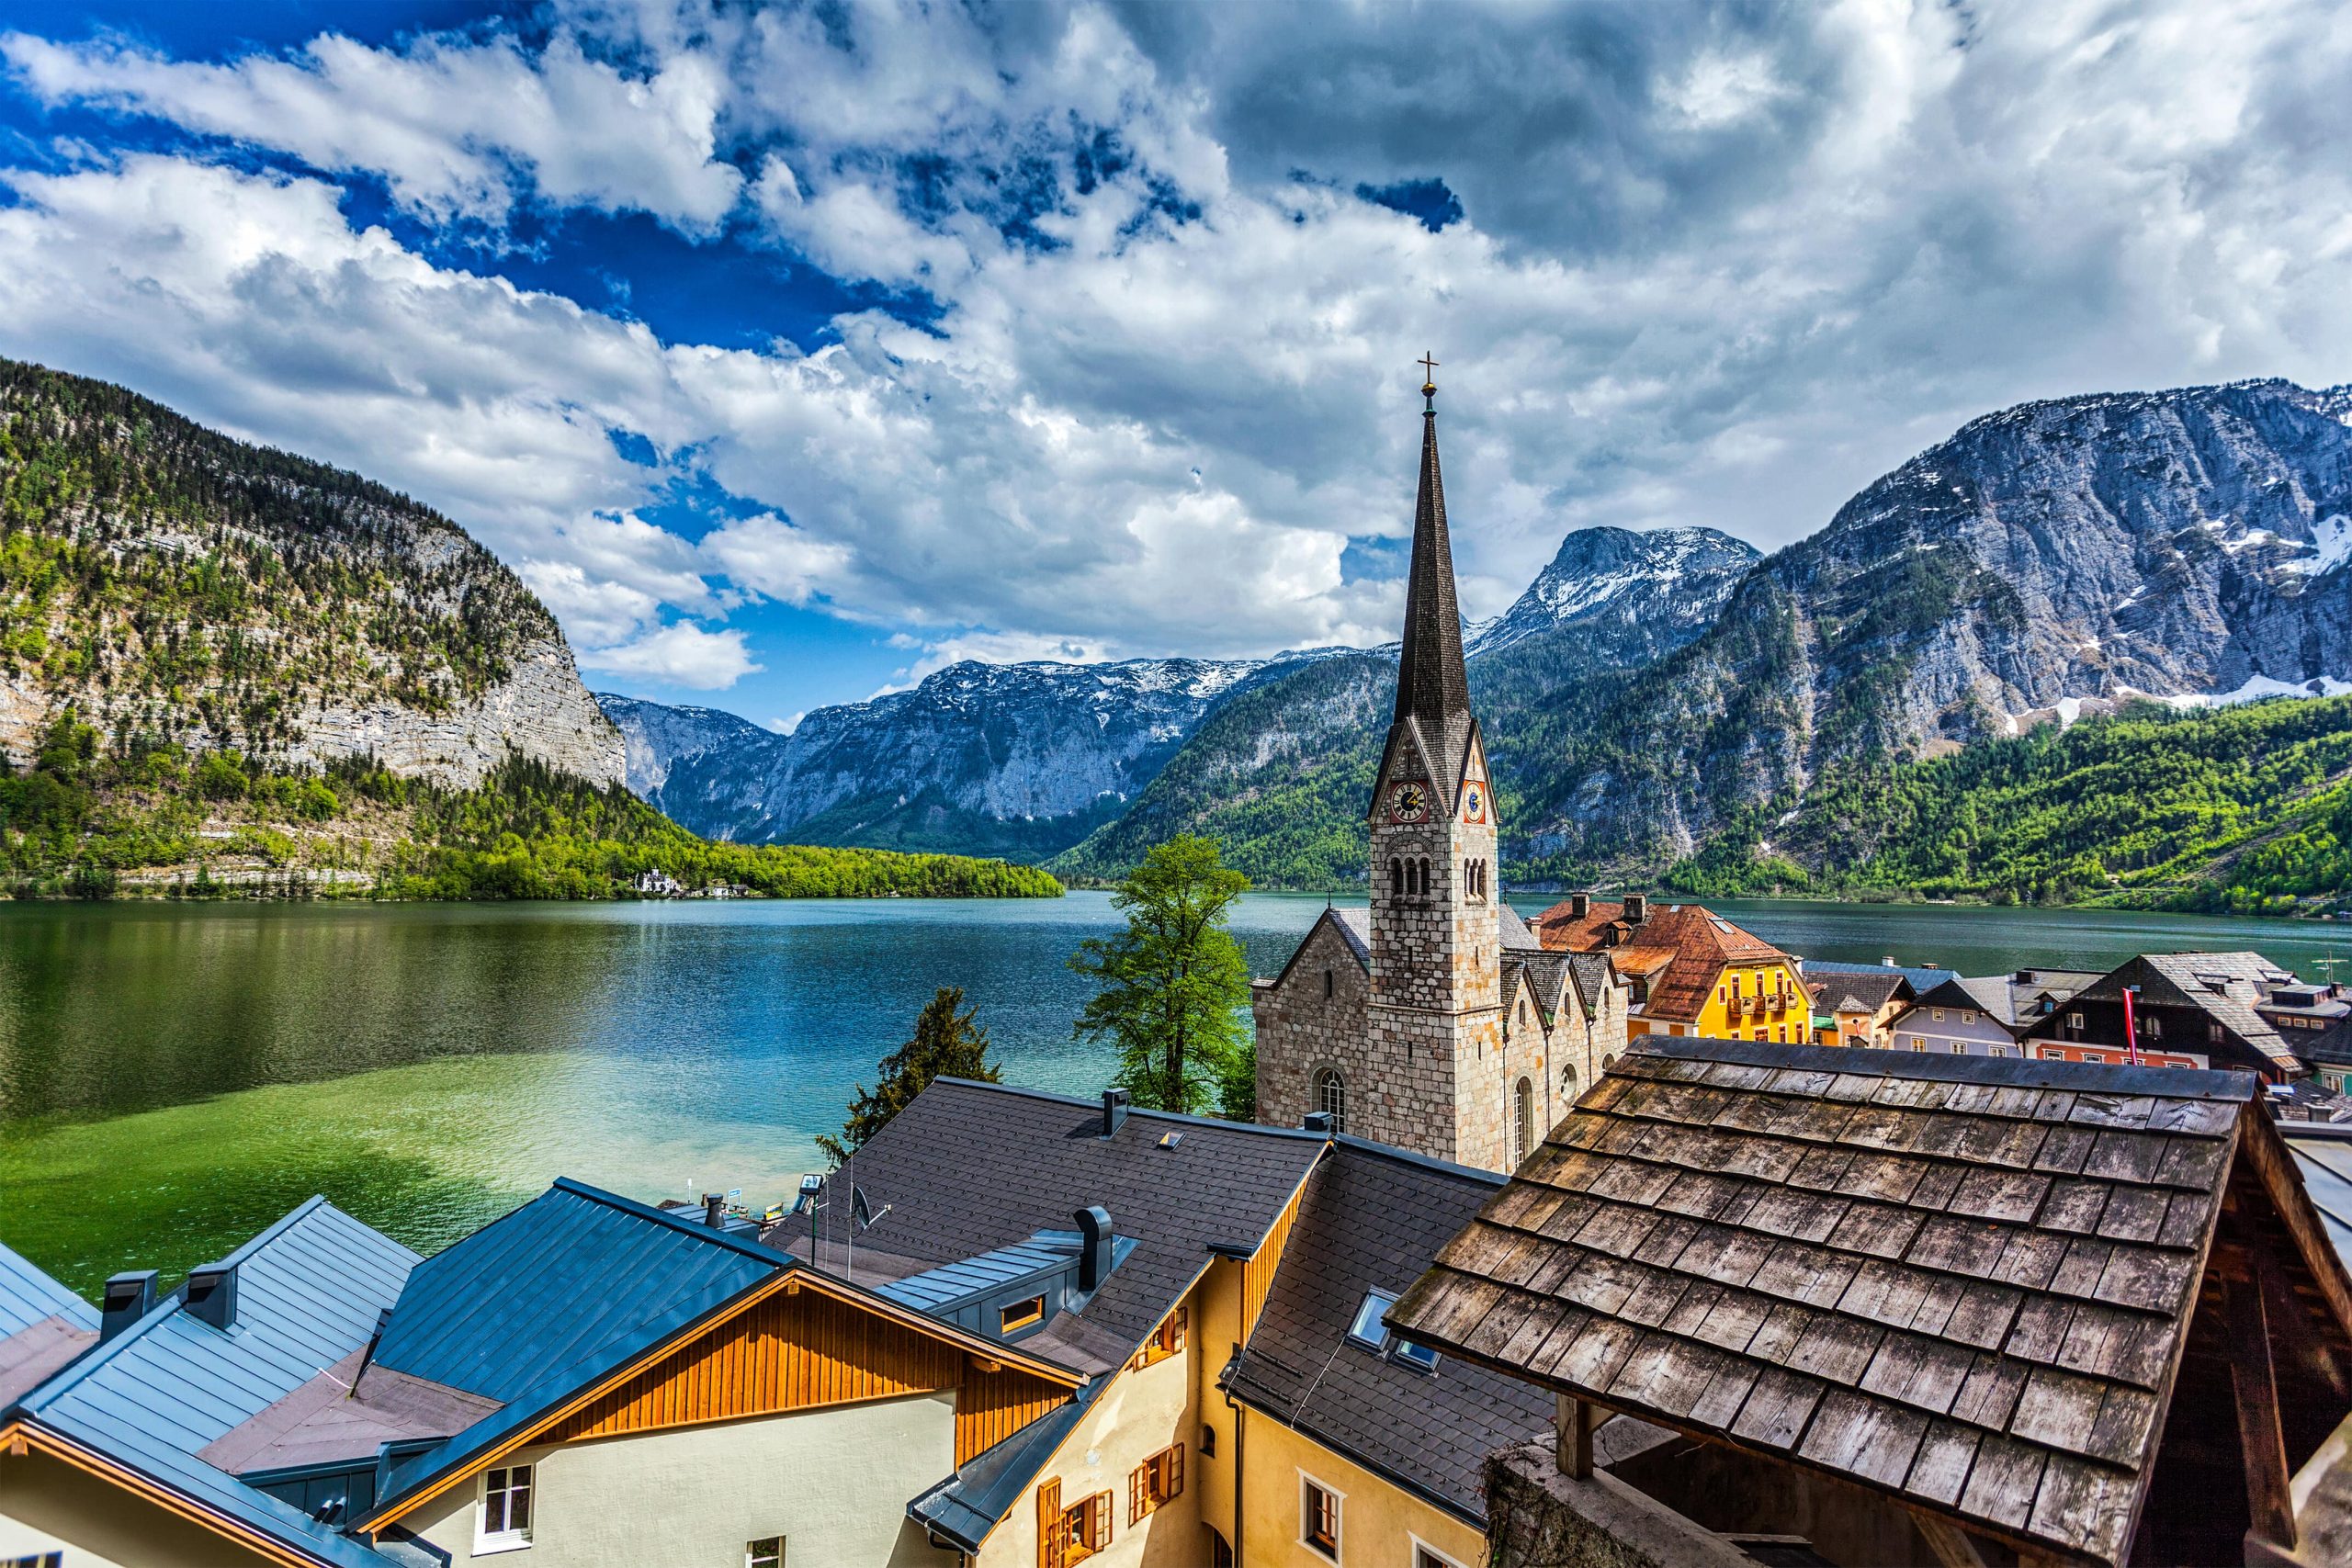 historic places to visit in austria